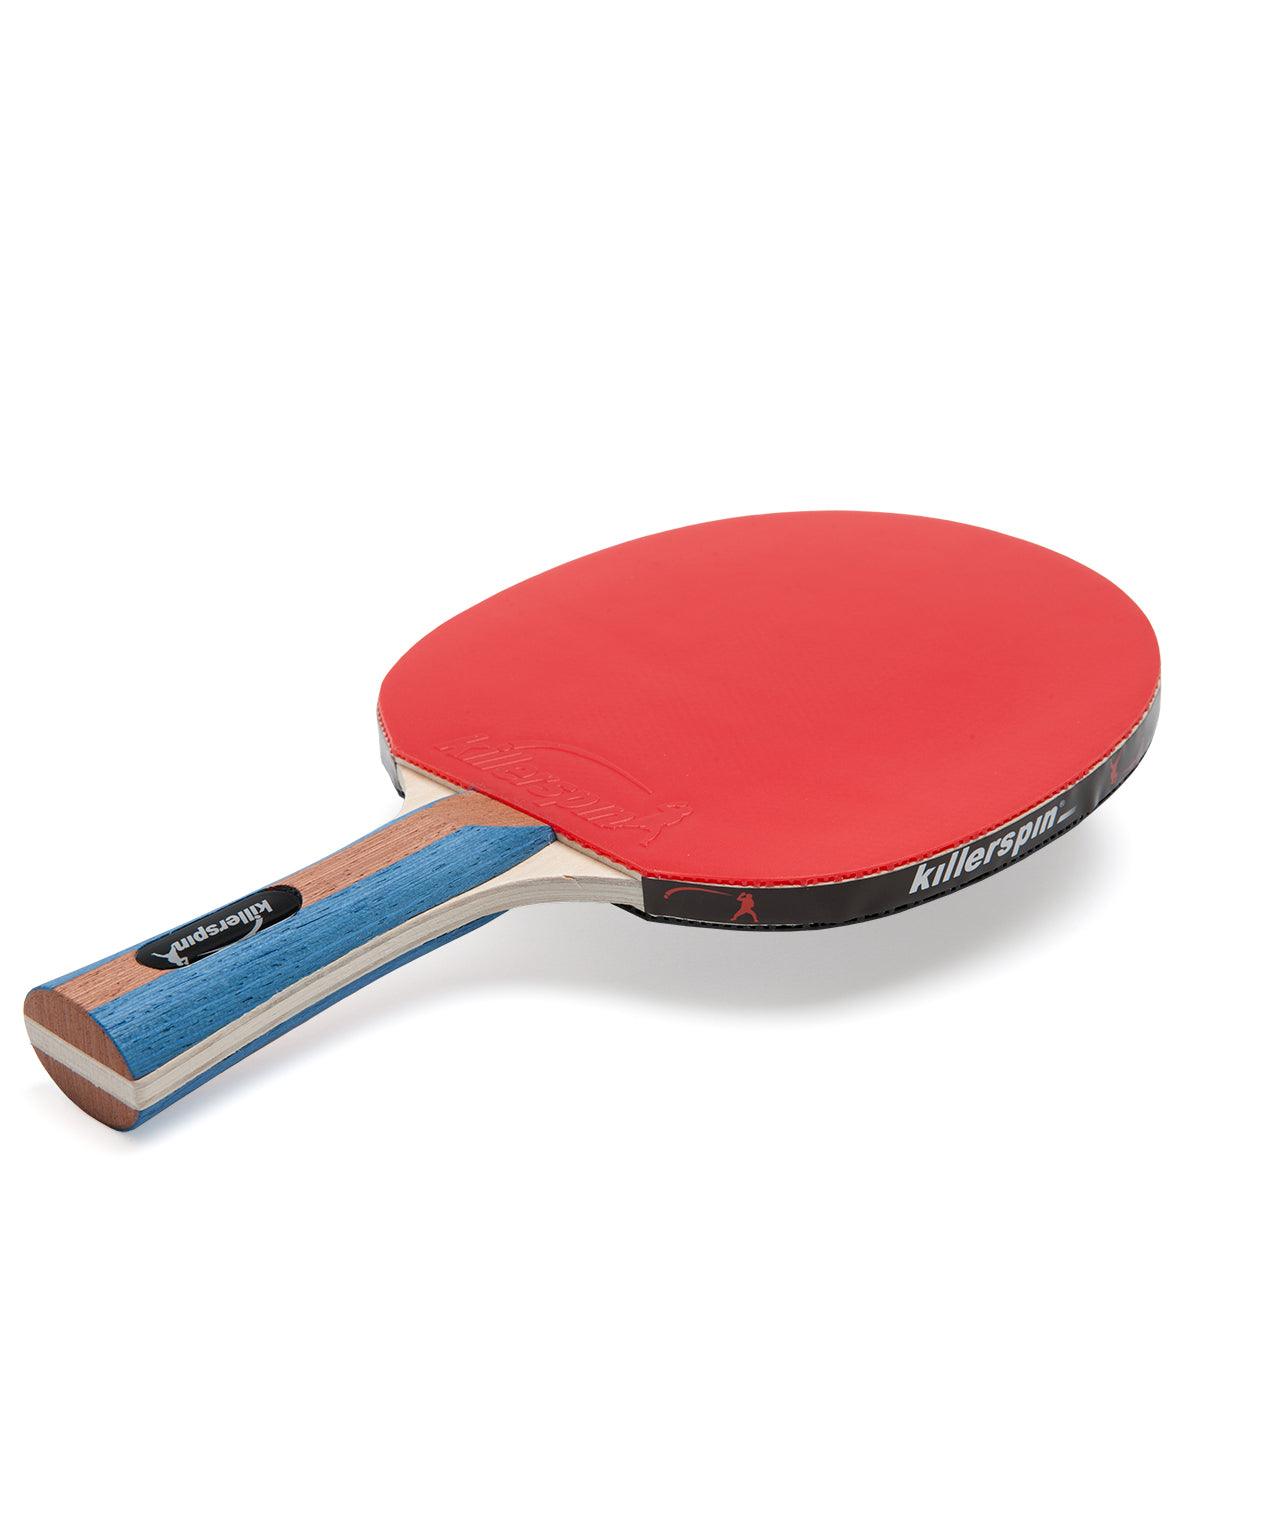 Killerspin Ping Pong Paddle Set JetSet4 Premium - Red Rubber